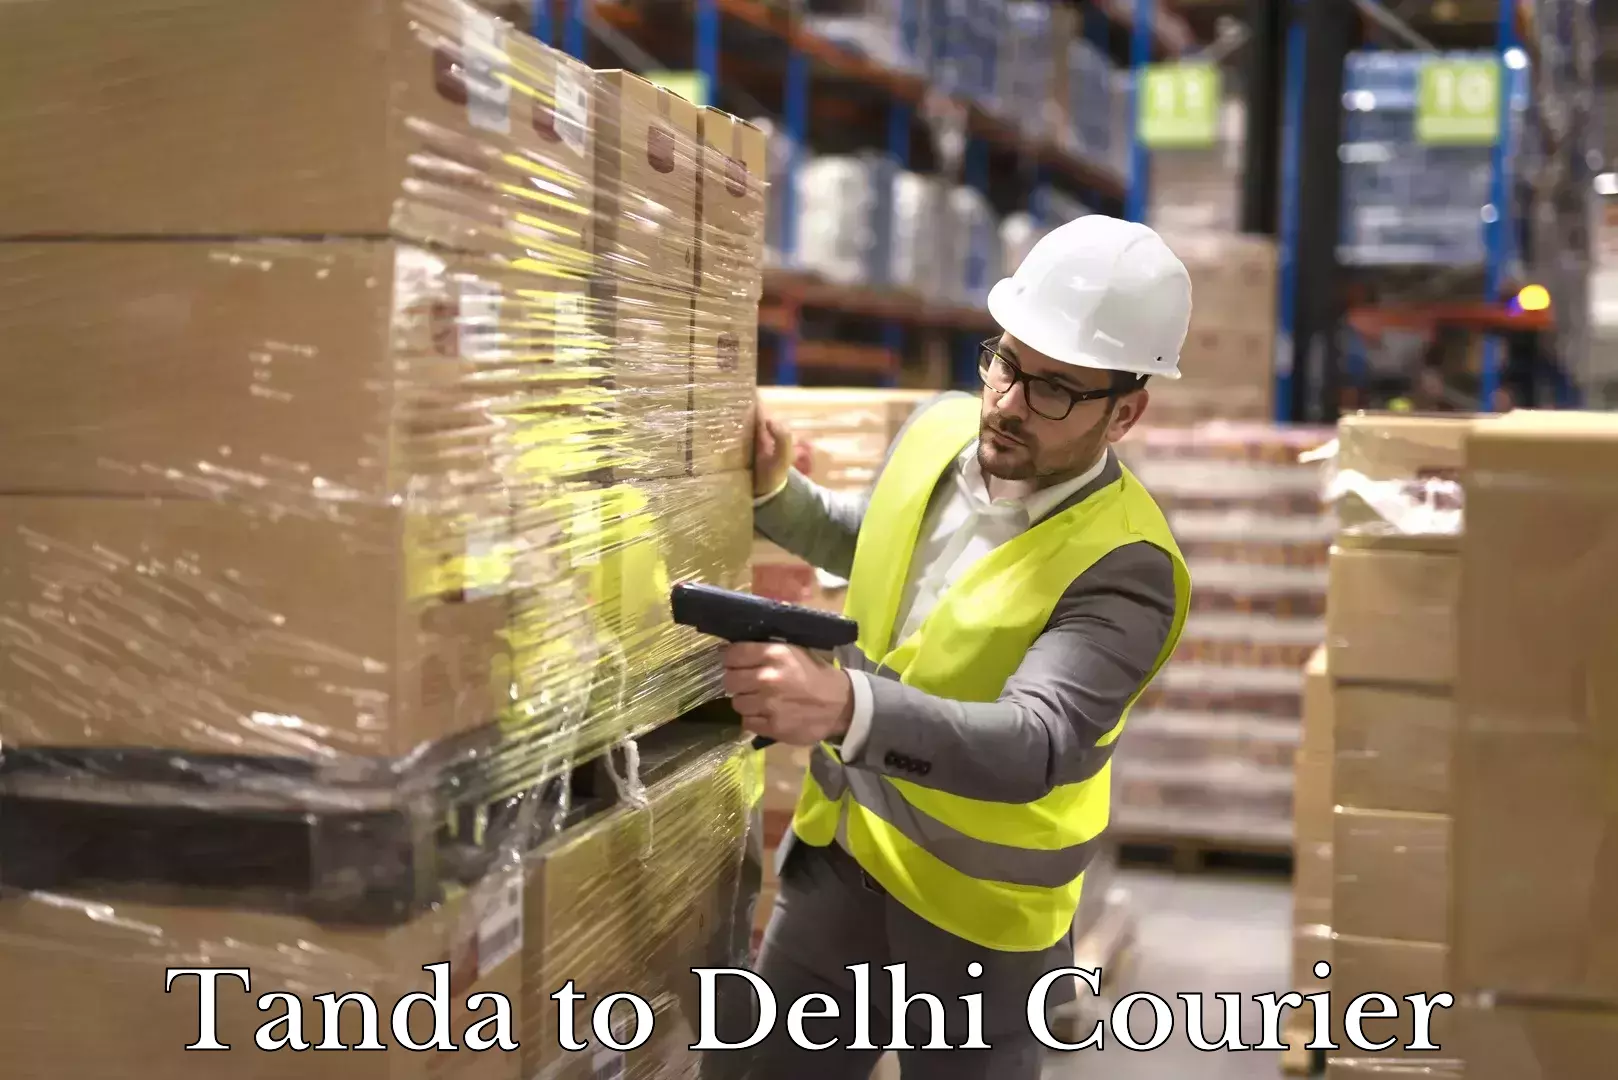 Customer-focused courier Tanda to Delhi